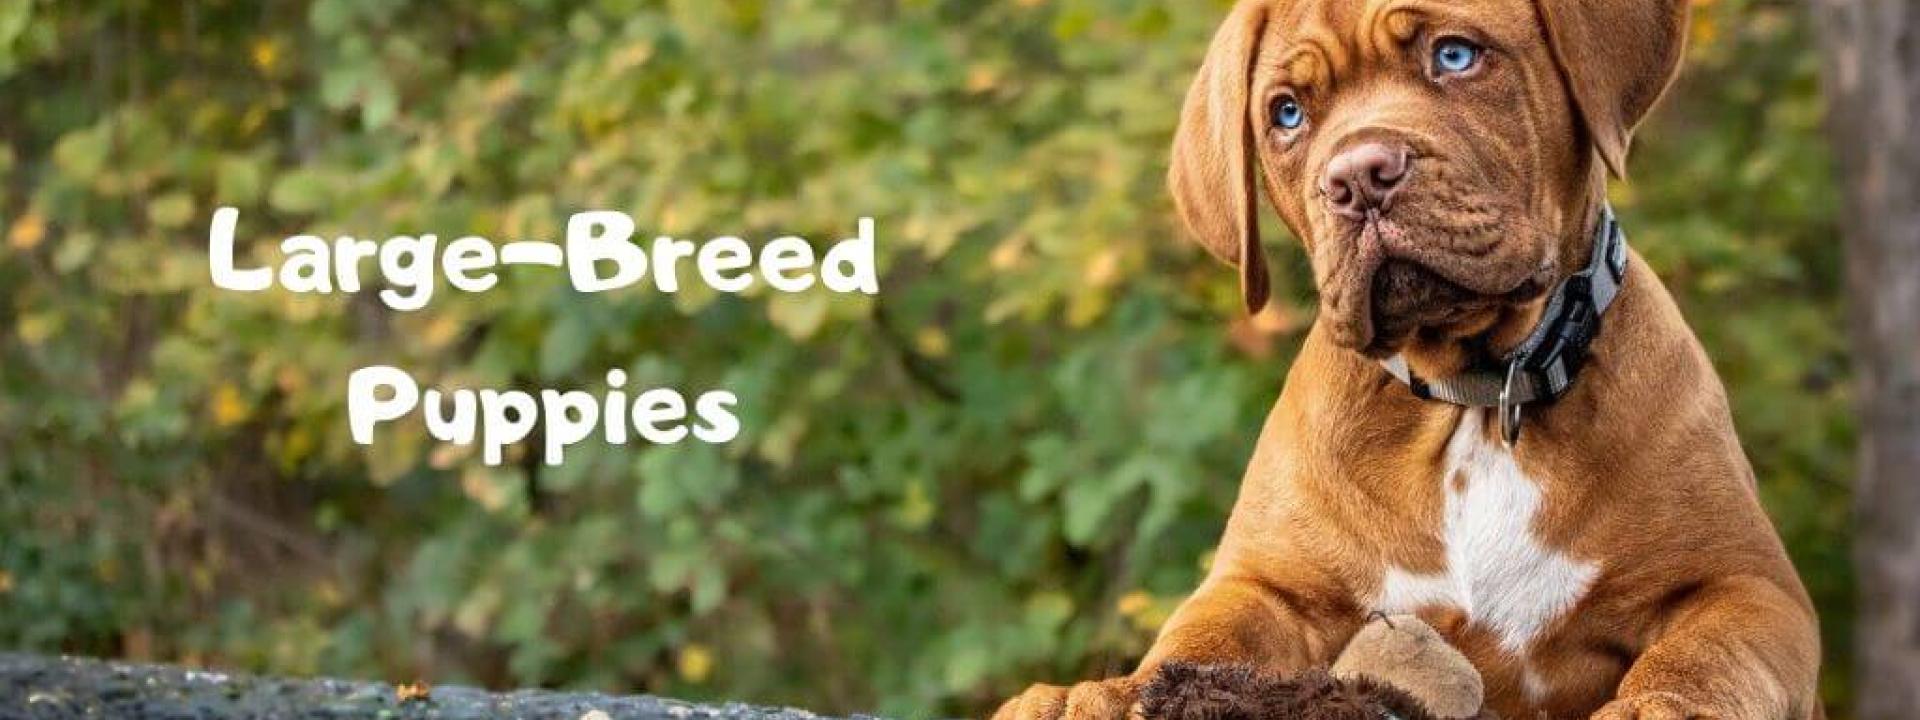 large-breed-puppies-blog-header.jpg